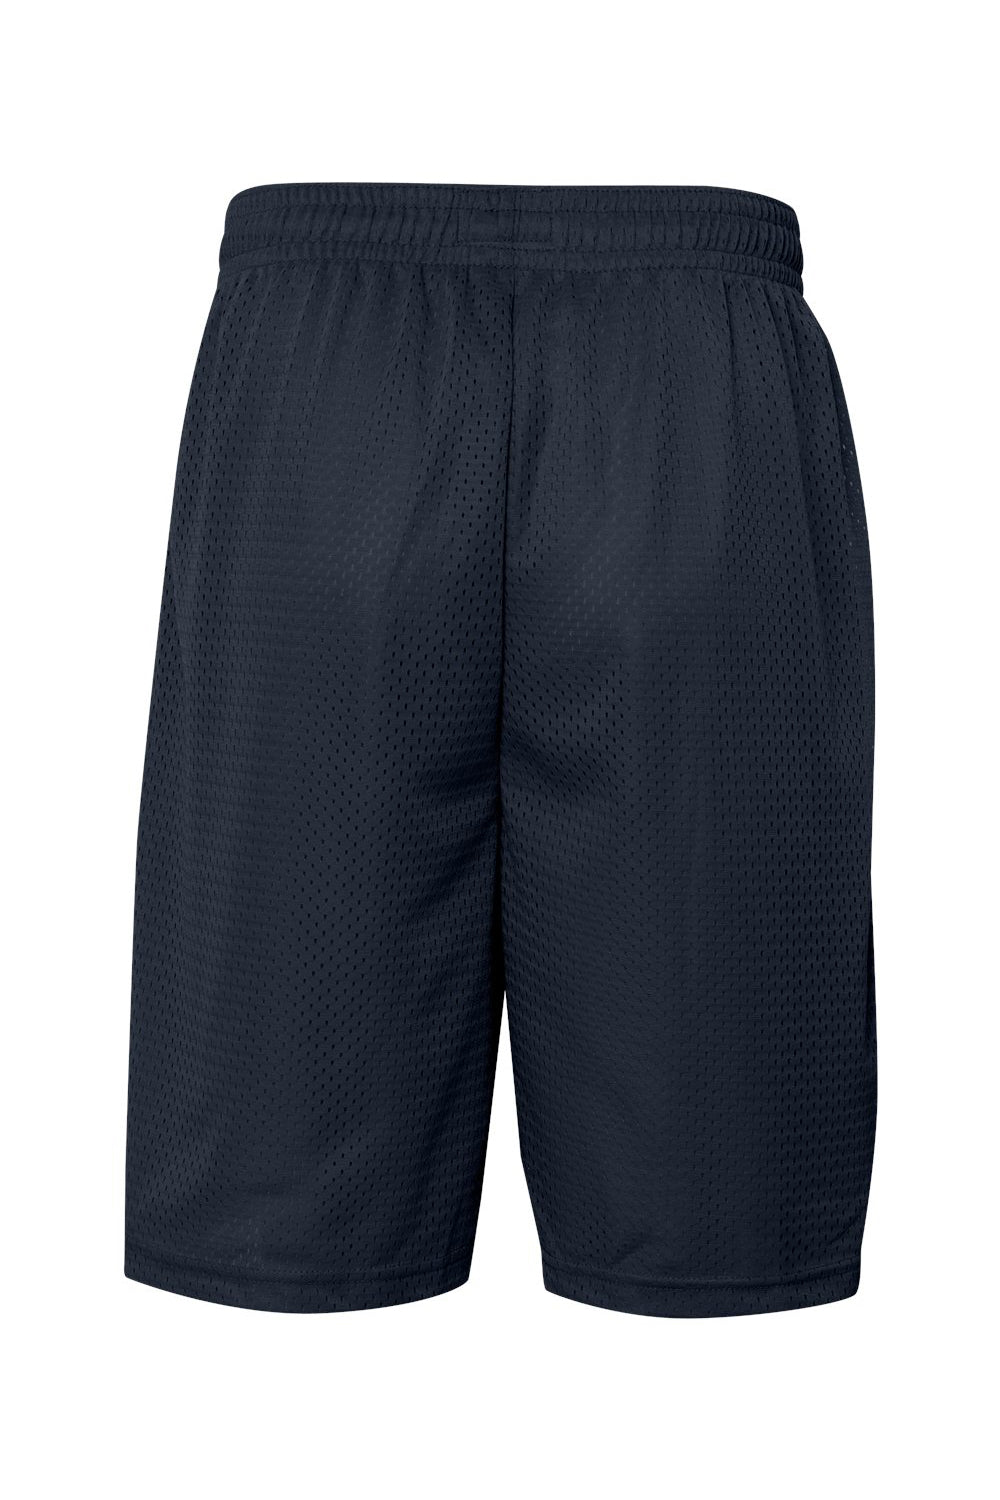 Badger 7219 Mens Pro Mesh Shorts w/ Pockets Navy Blue Flat Back